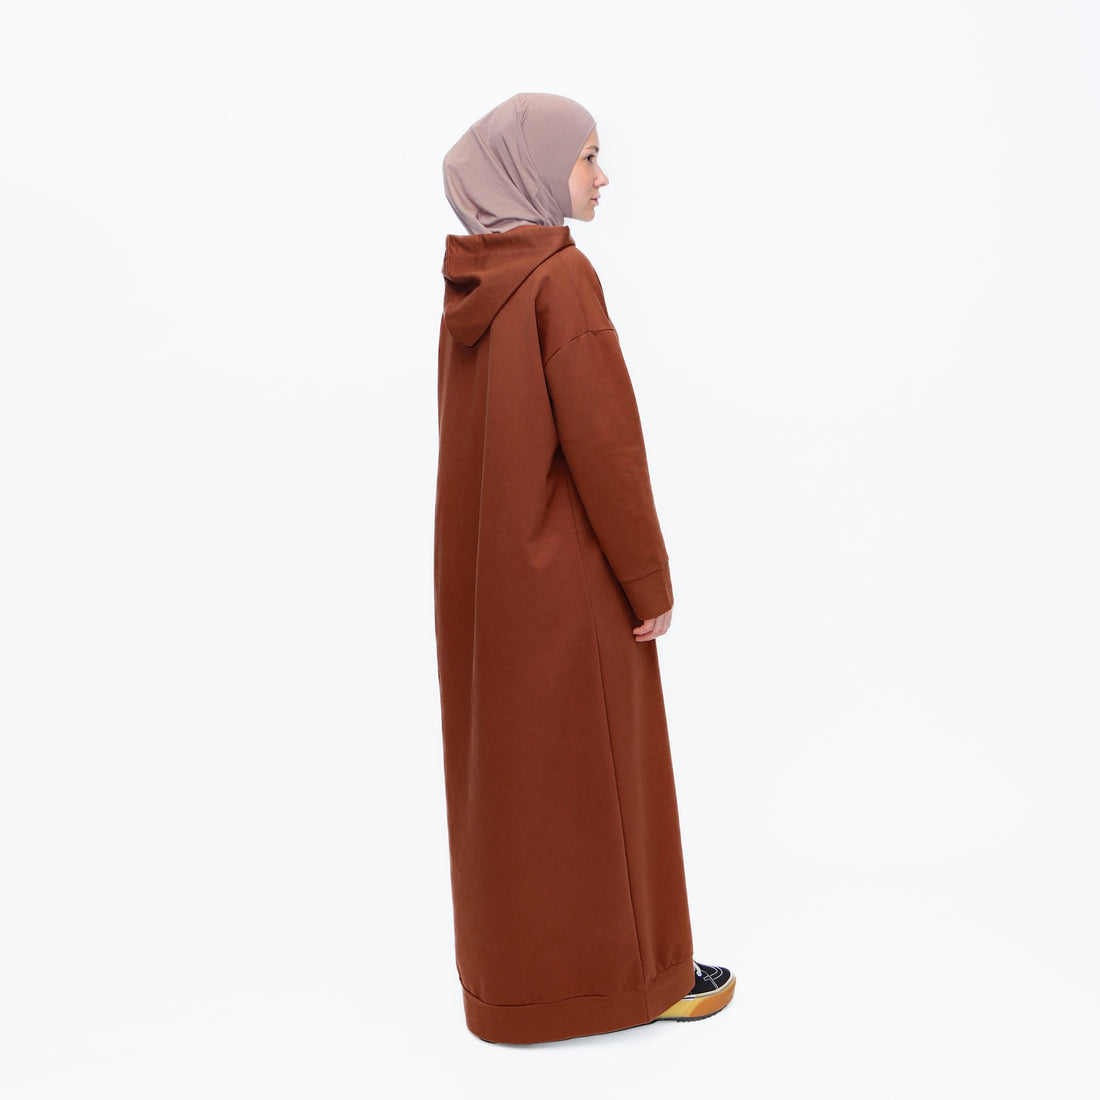 Muslim dress for women "MOON" abaya dress style